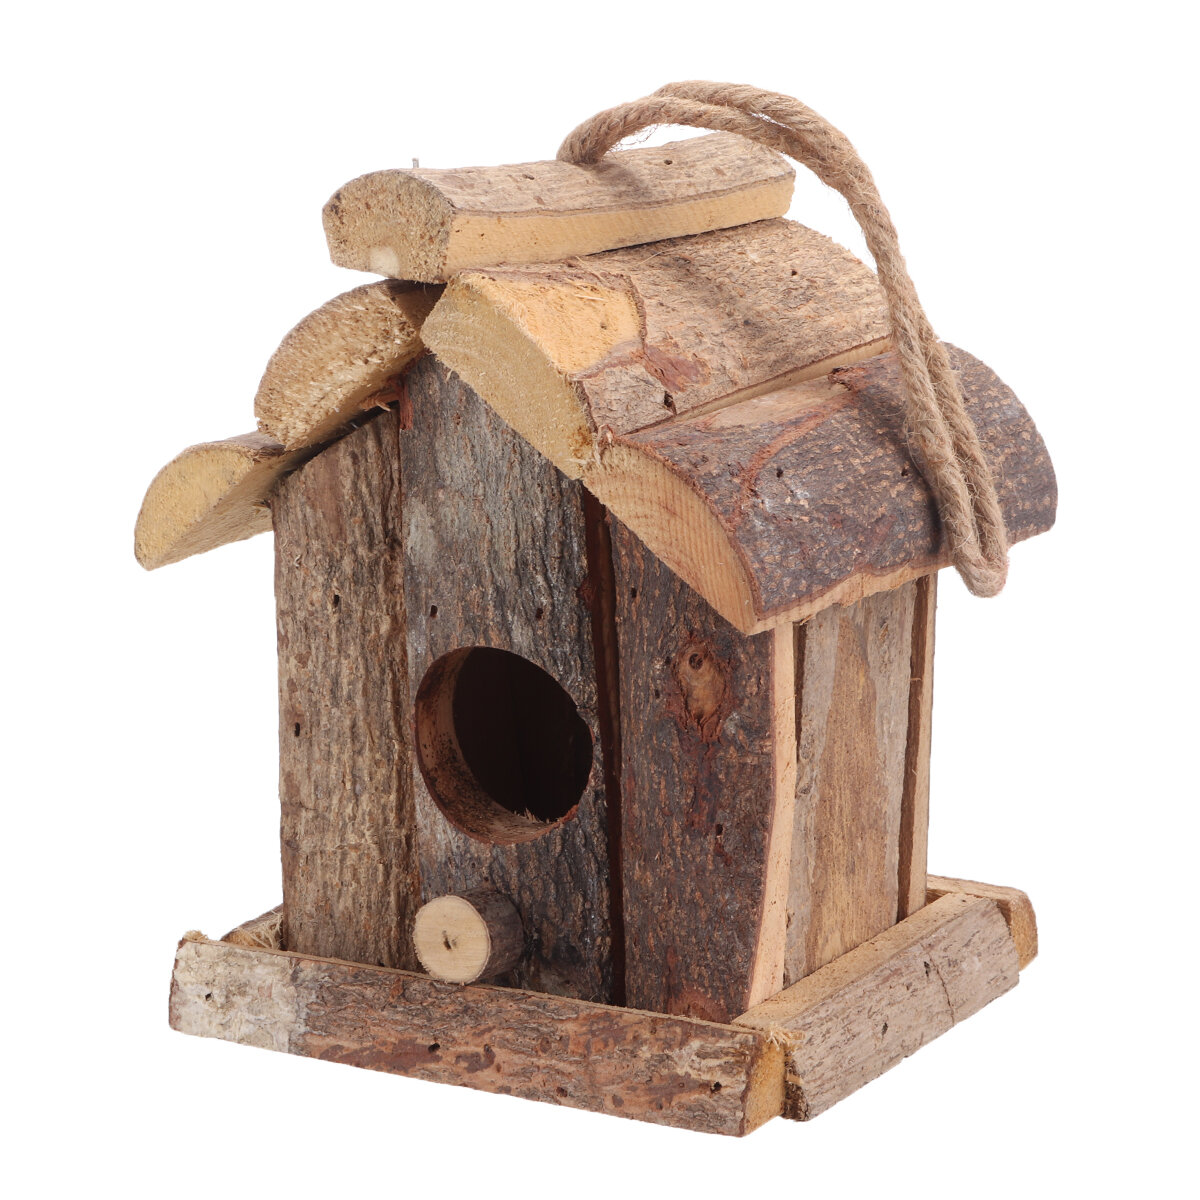 Vintage houten vogelhuisje nestkastje kleine wilde vogels nest huis tuindecoratie